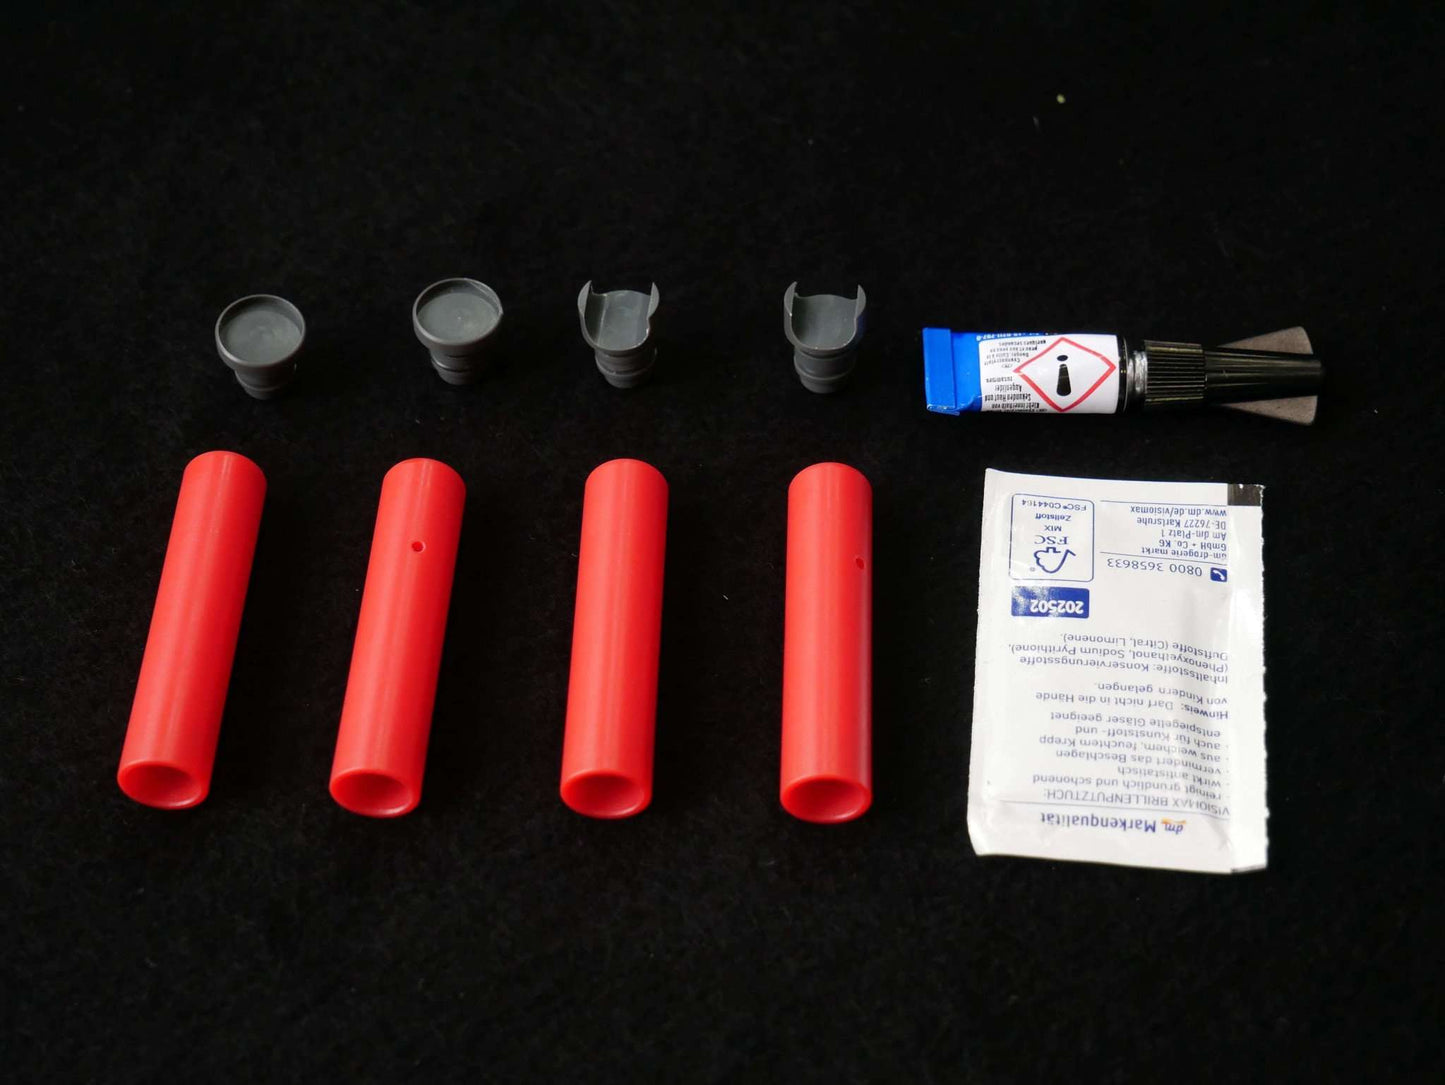 Lieferumfang Landegestell System rot: 4x Adapter, 4x Landefüße, 1x Reinigungstuch, 1 Tube Kleber